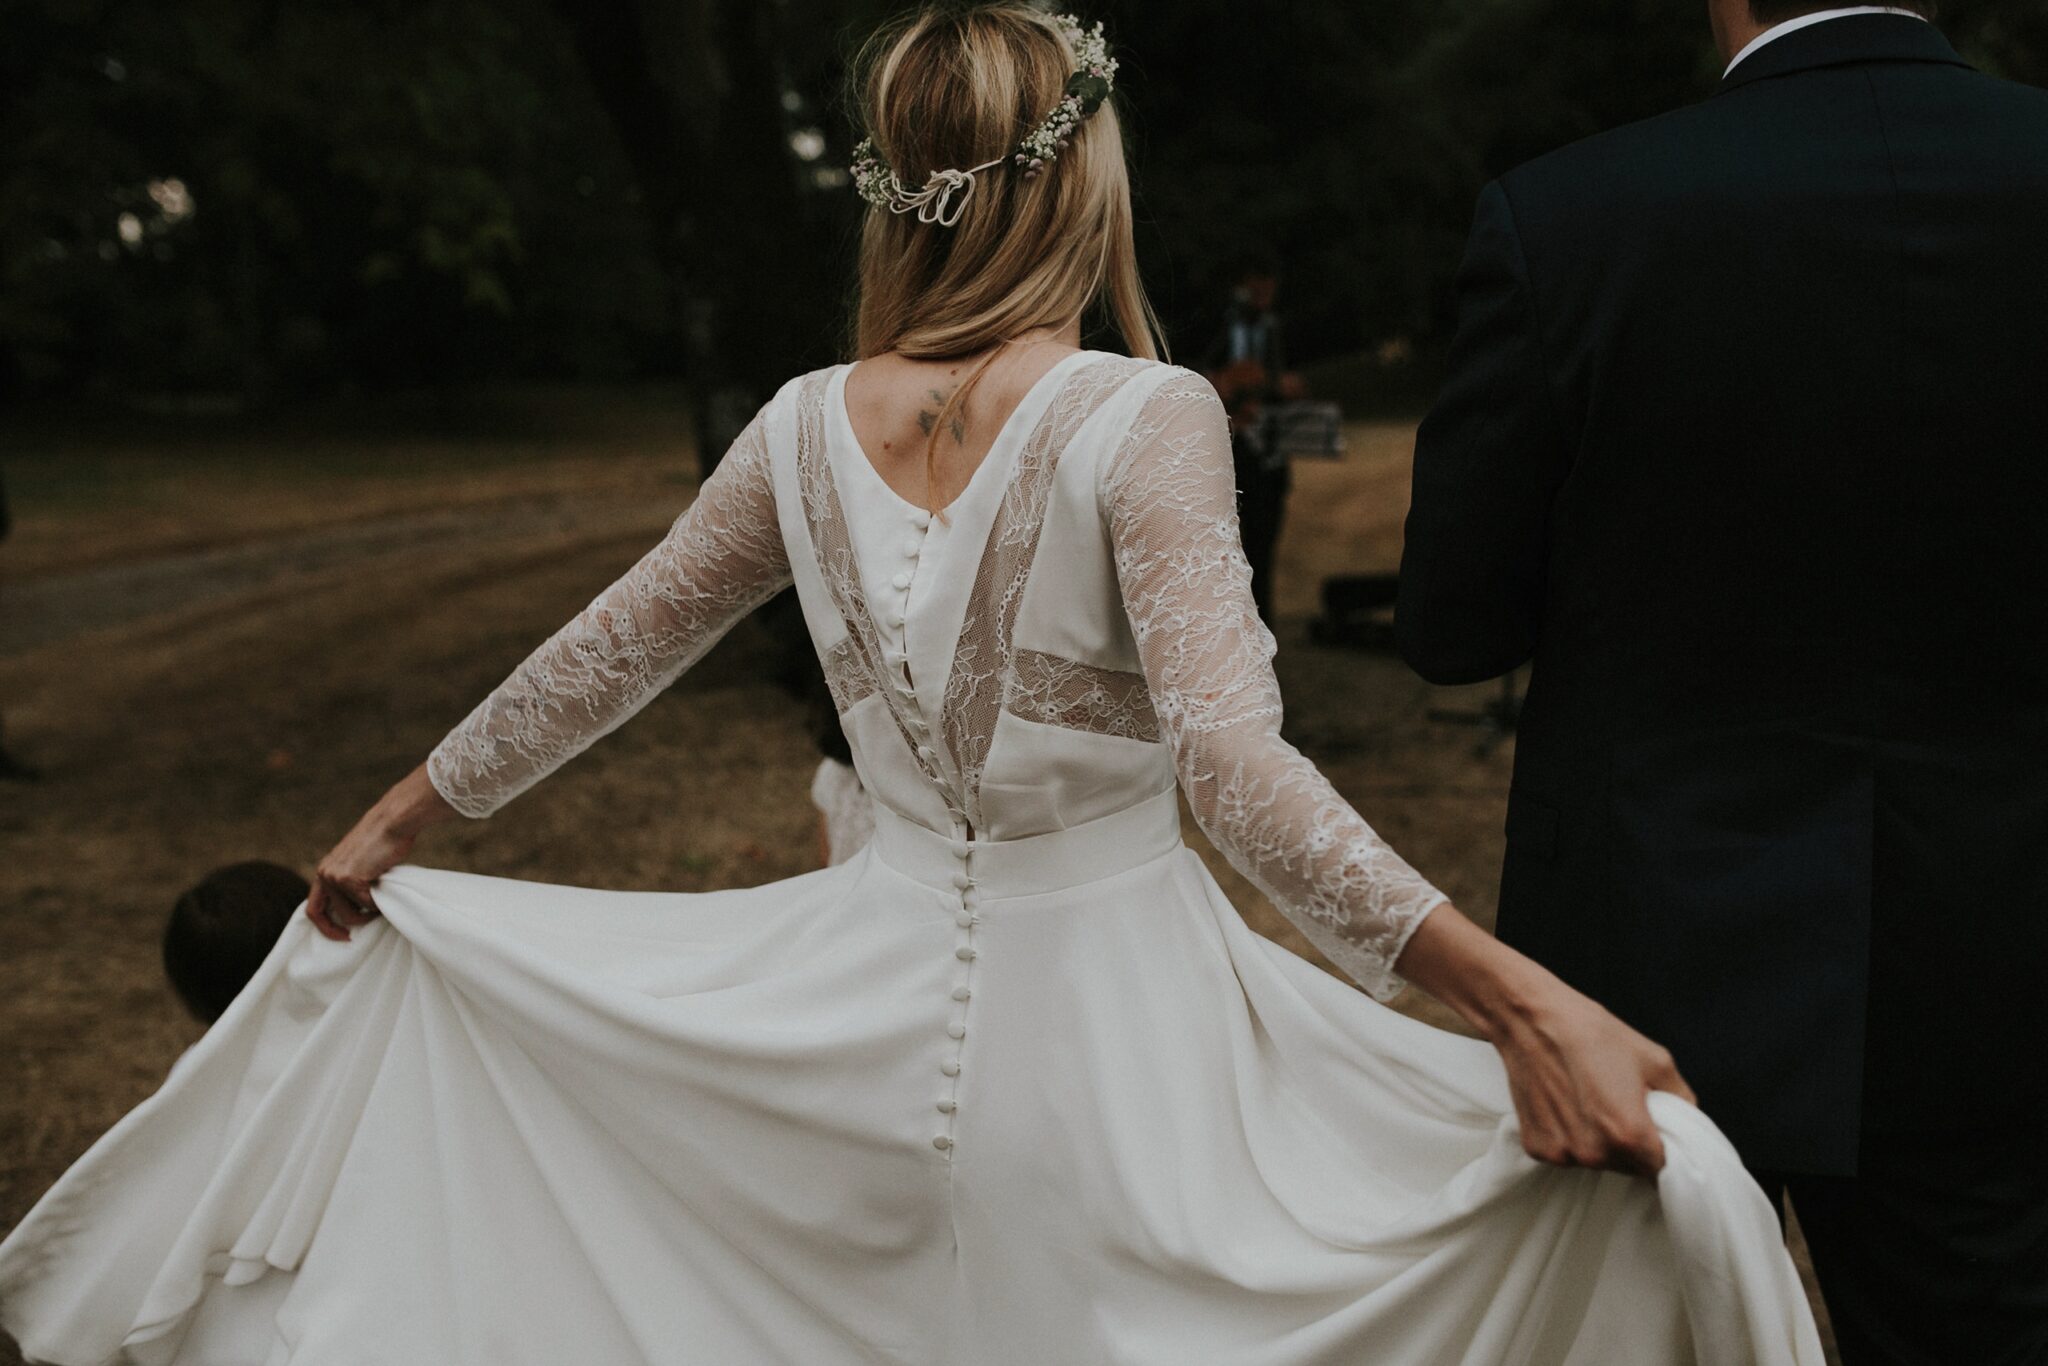 Modern bride dancing holding her designer gown on her wedding